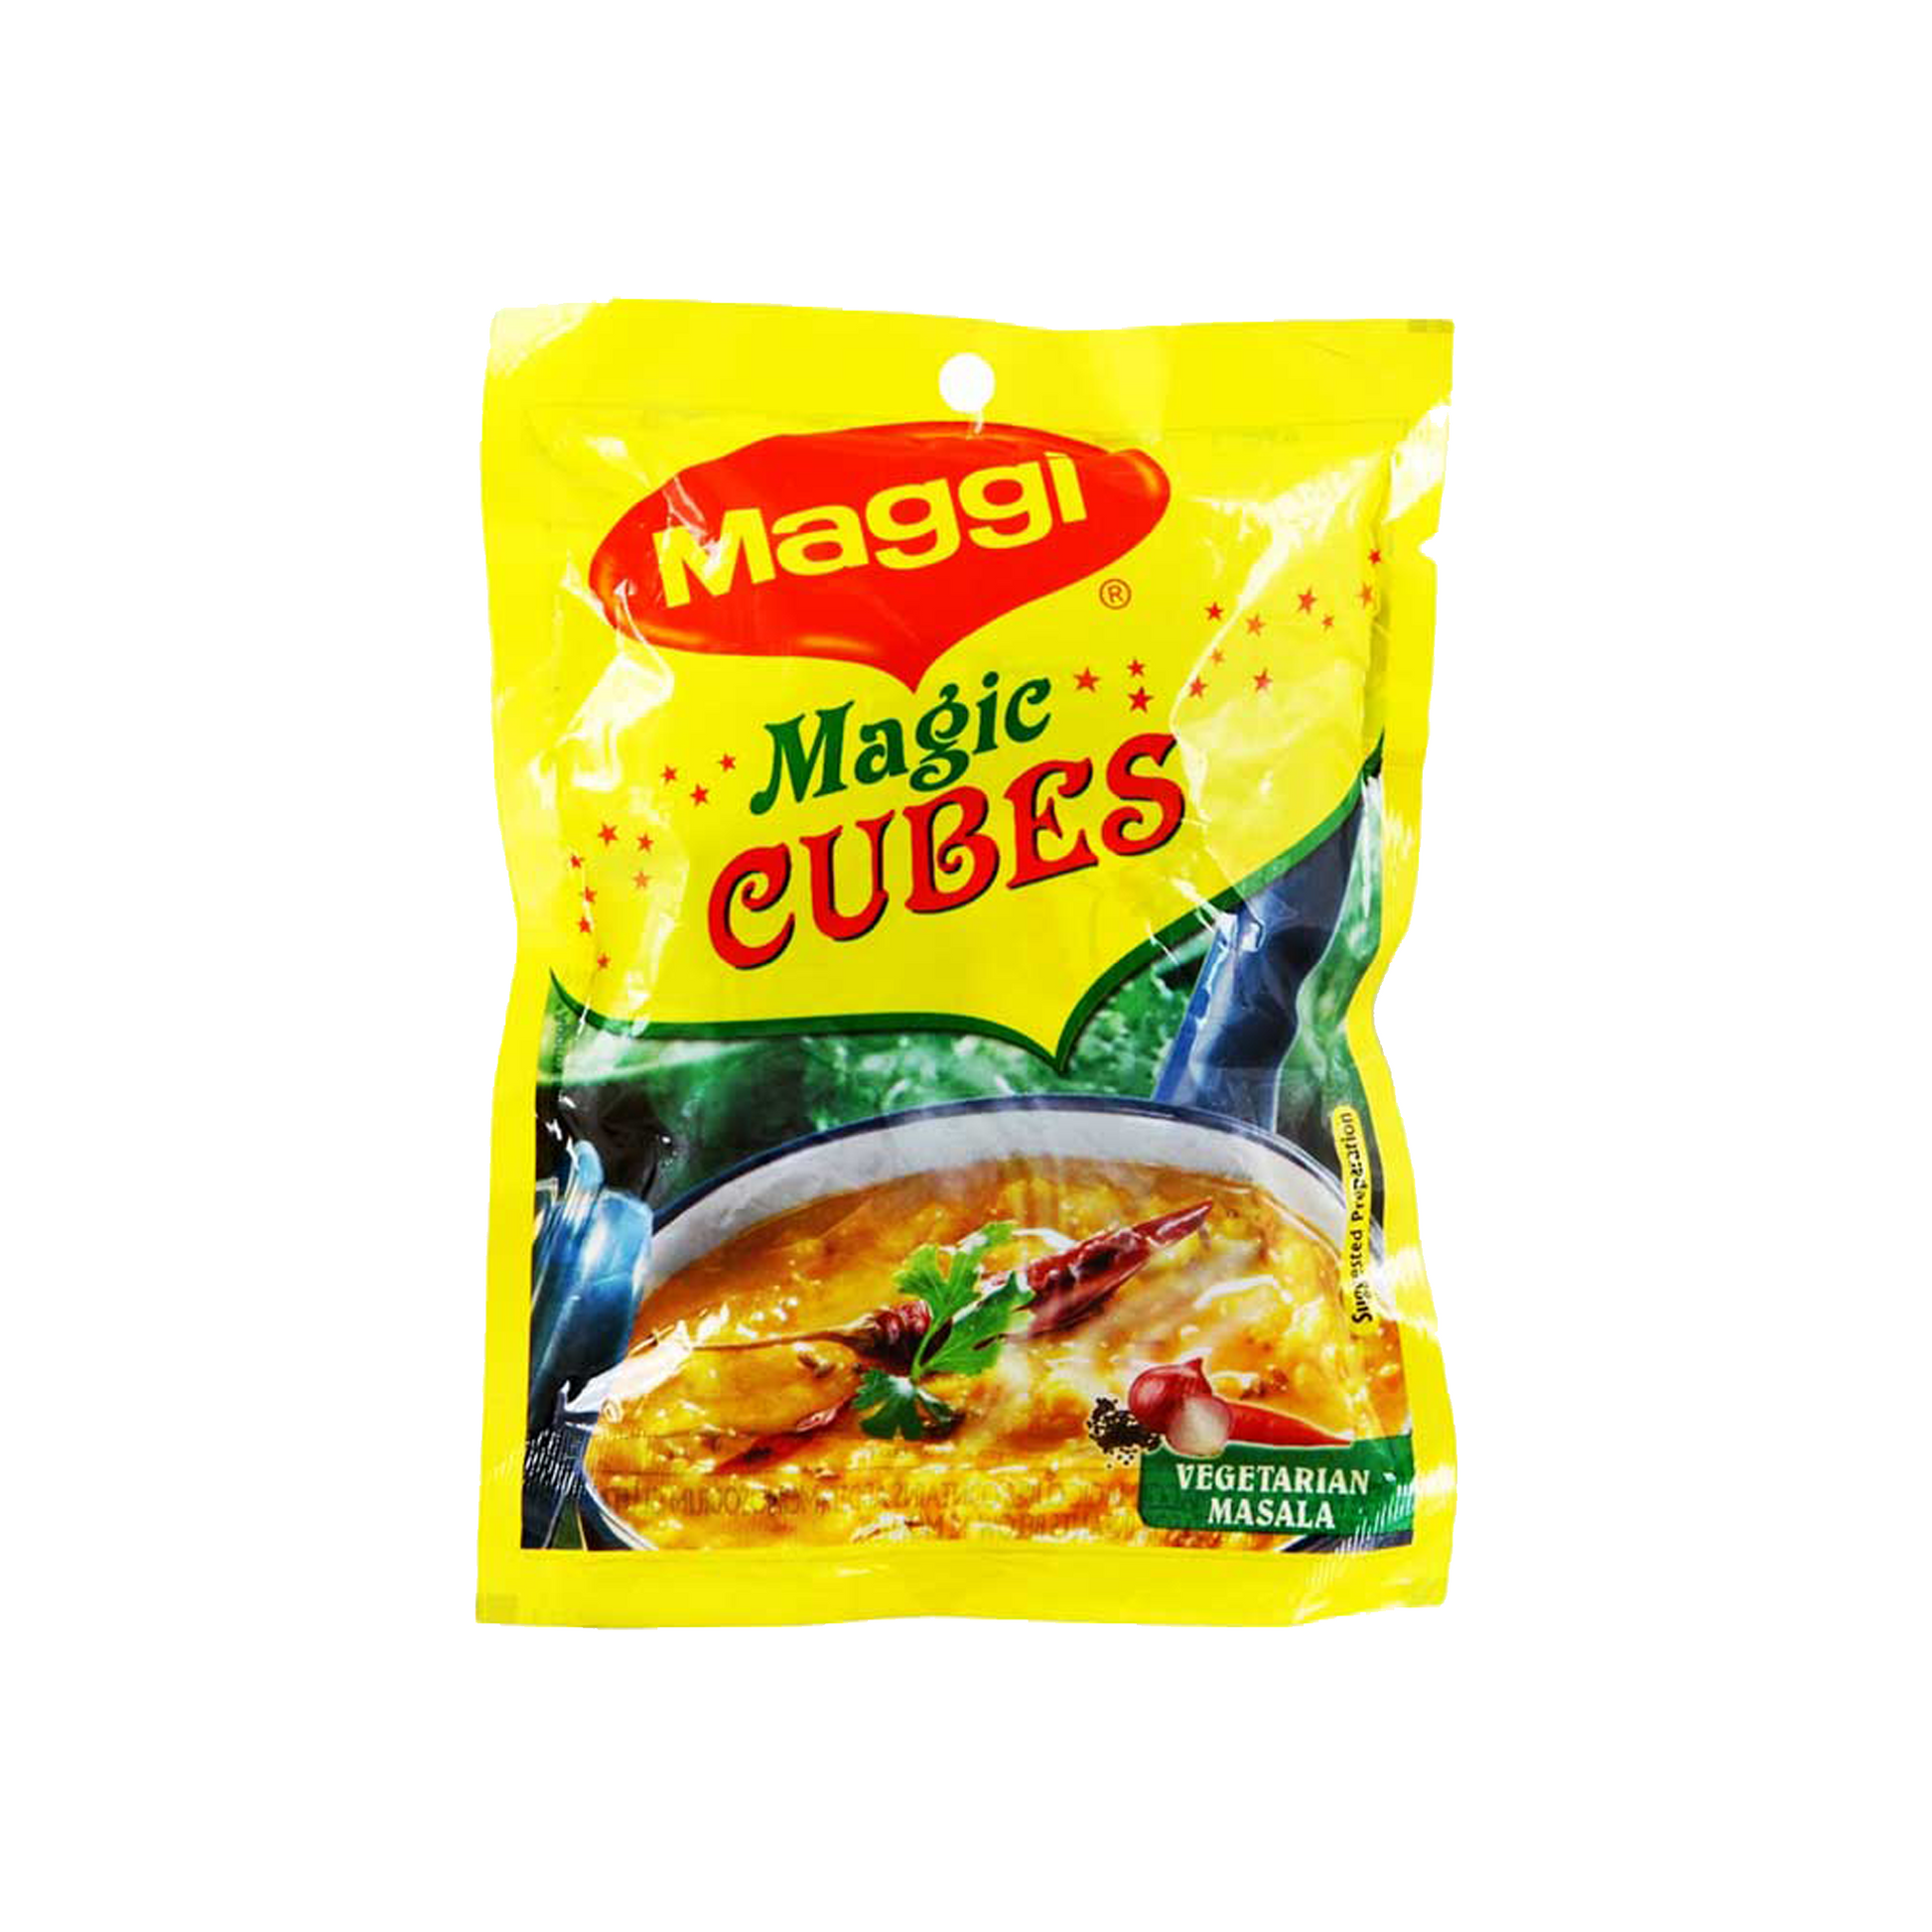 Maggi Magic Cubes Vegetarian.